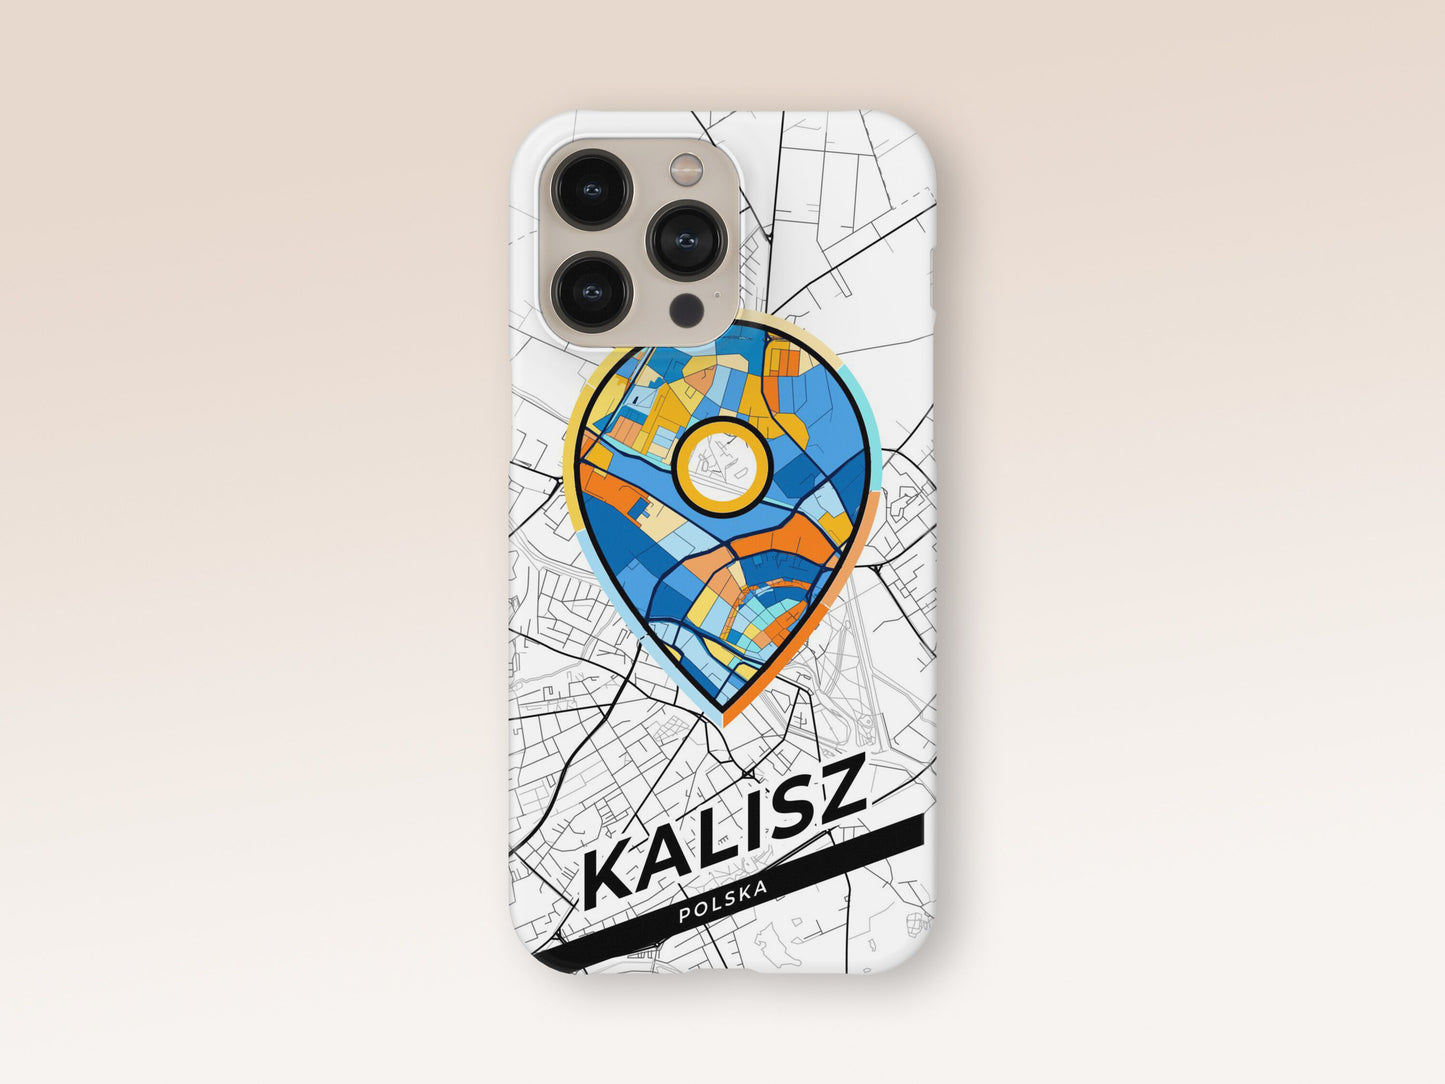 Kalisz Poland slim phone case with colorful icon. Birthday, wedding or housewarming gift. Couple match cases. 1